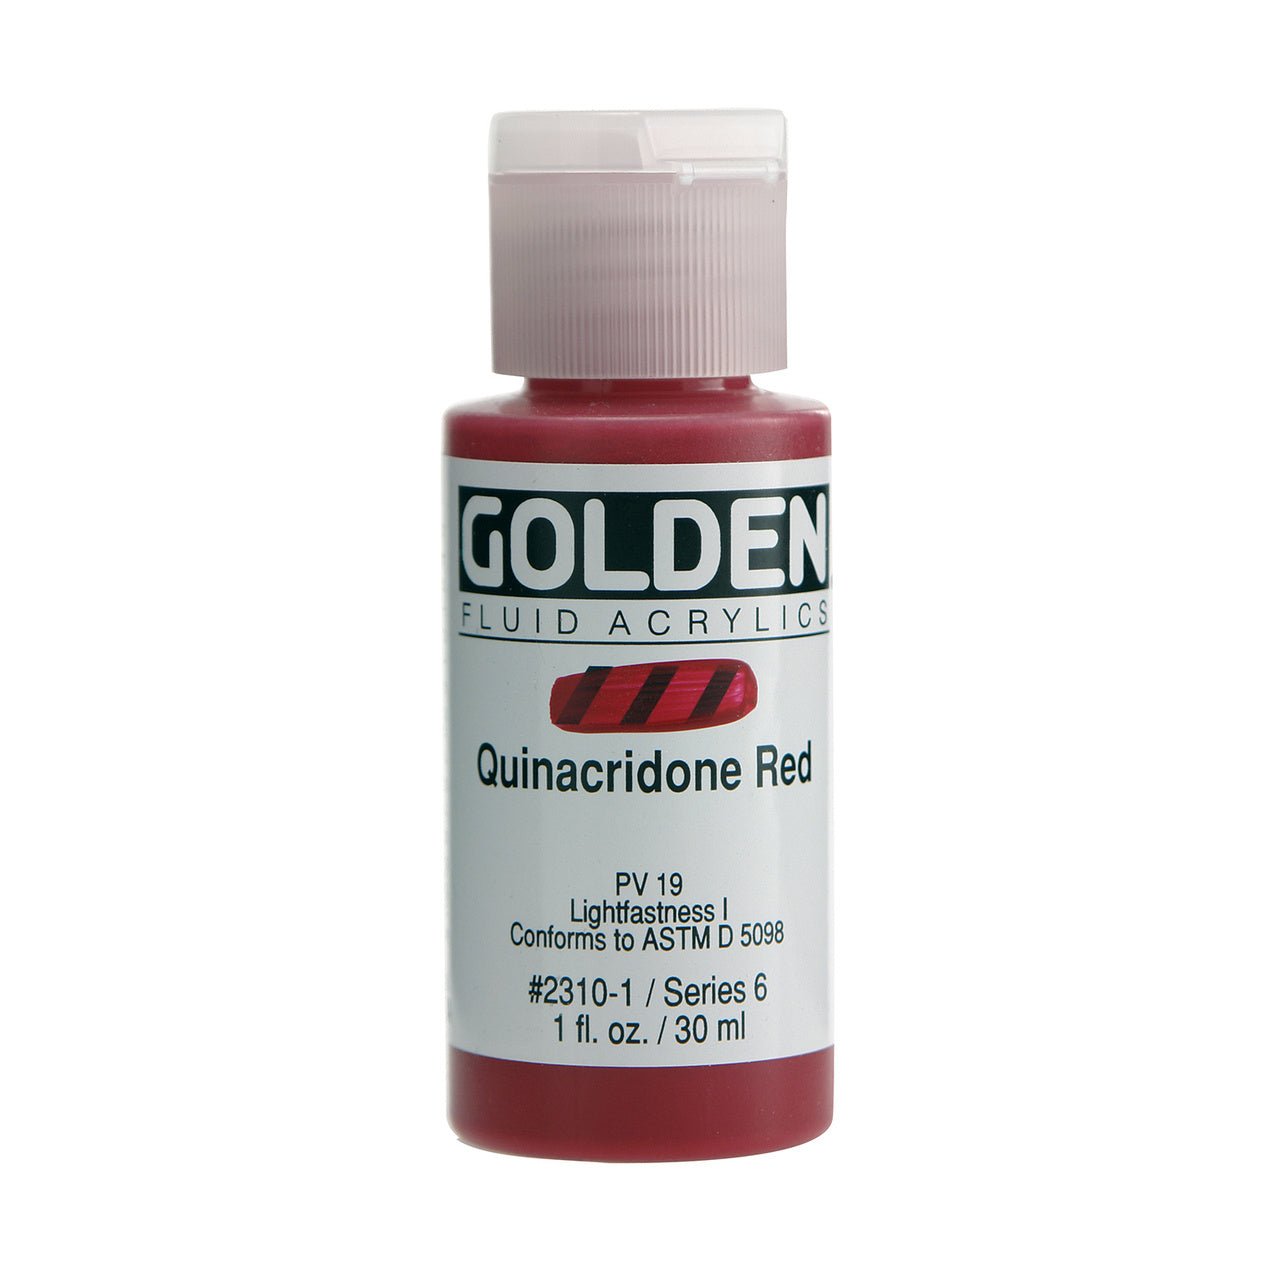 Golden Fluid Acrylic Quinacridone Red 1 oz - merriartist.com